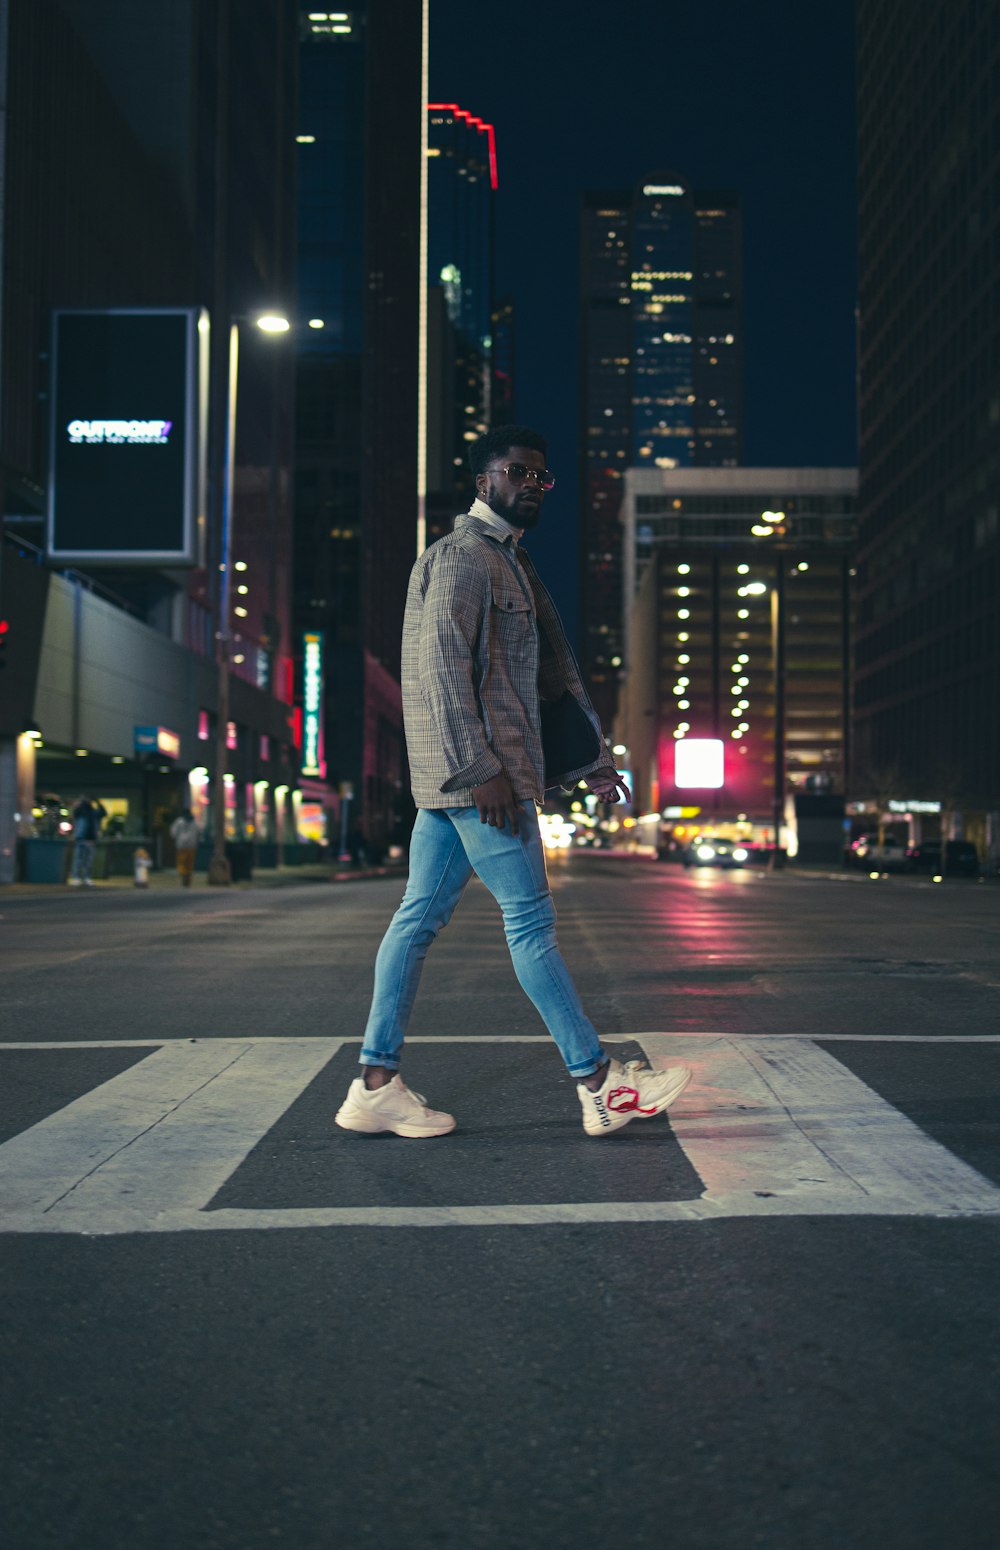 medeleerling Geestig extase man in gray jacket and blue denim jeans standing on sidewalk during night  time photo – Free Clothing Image on Unsplash